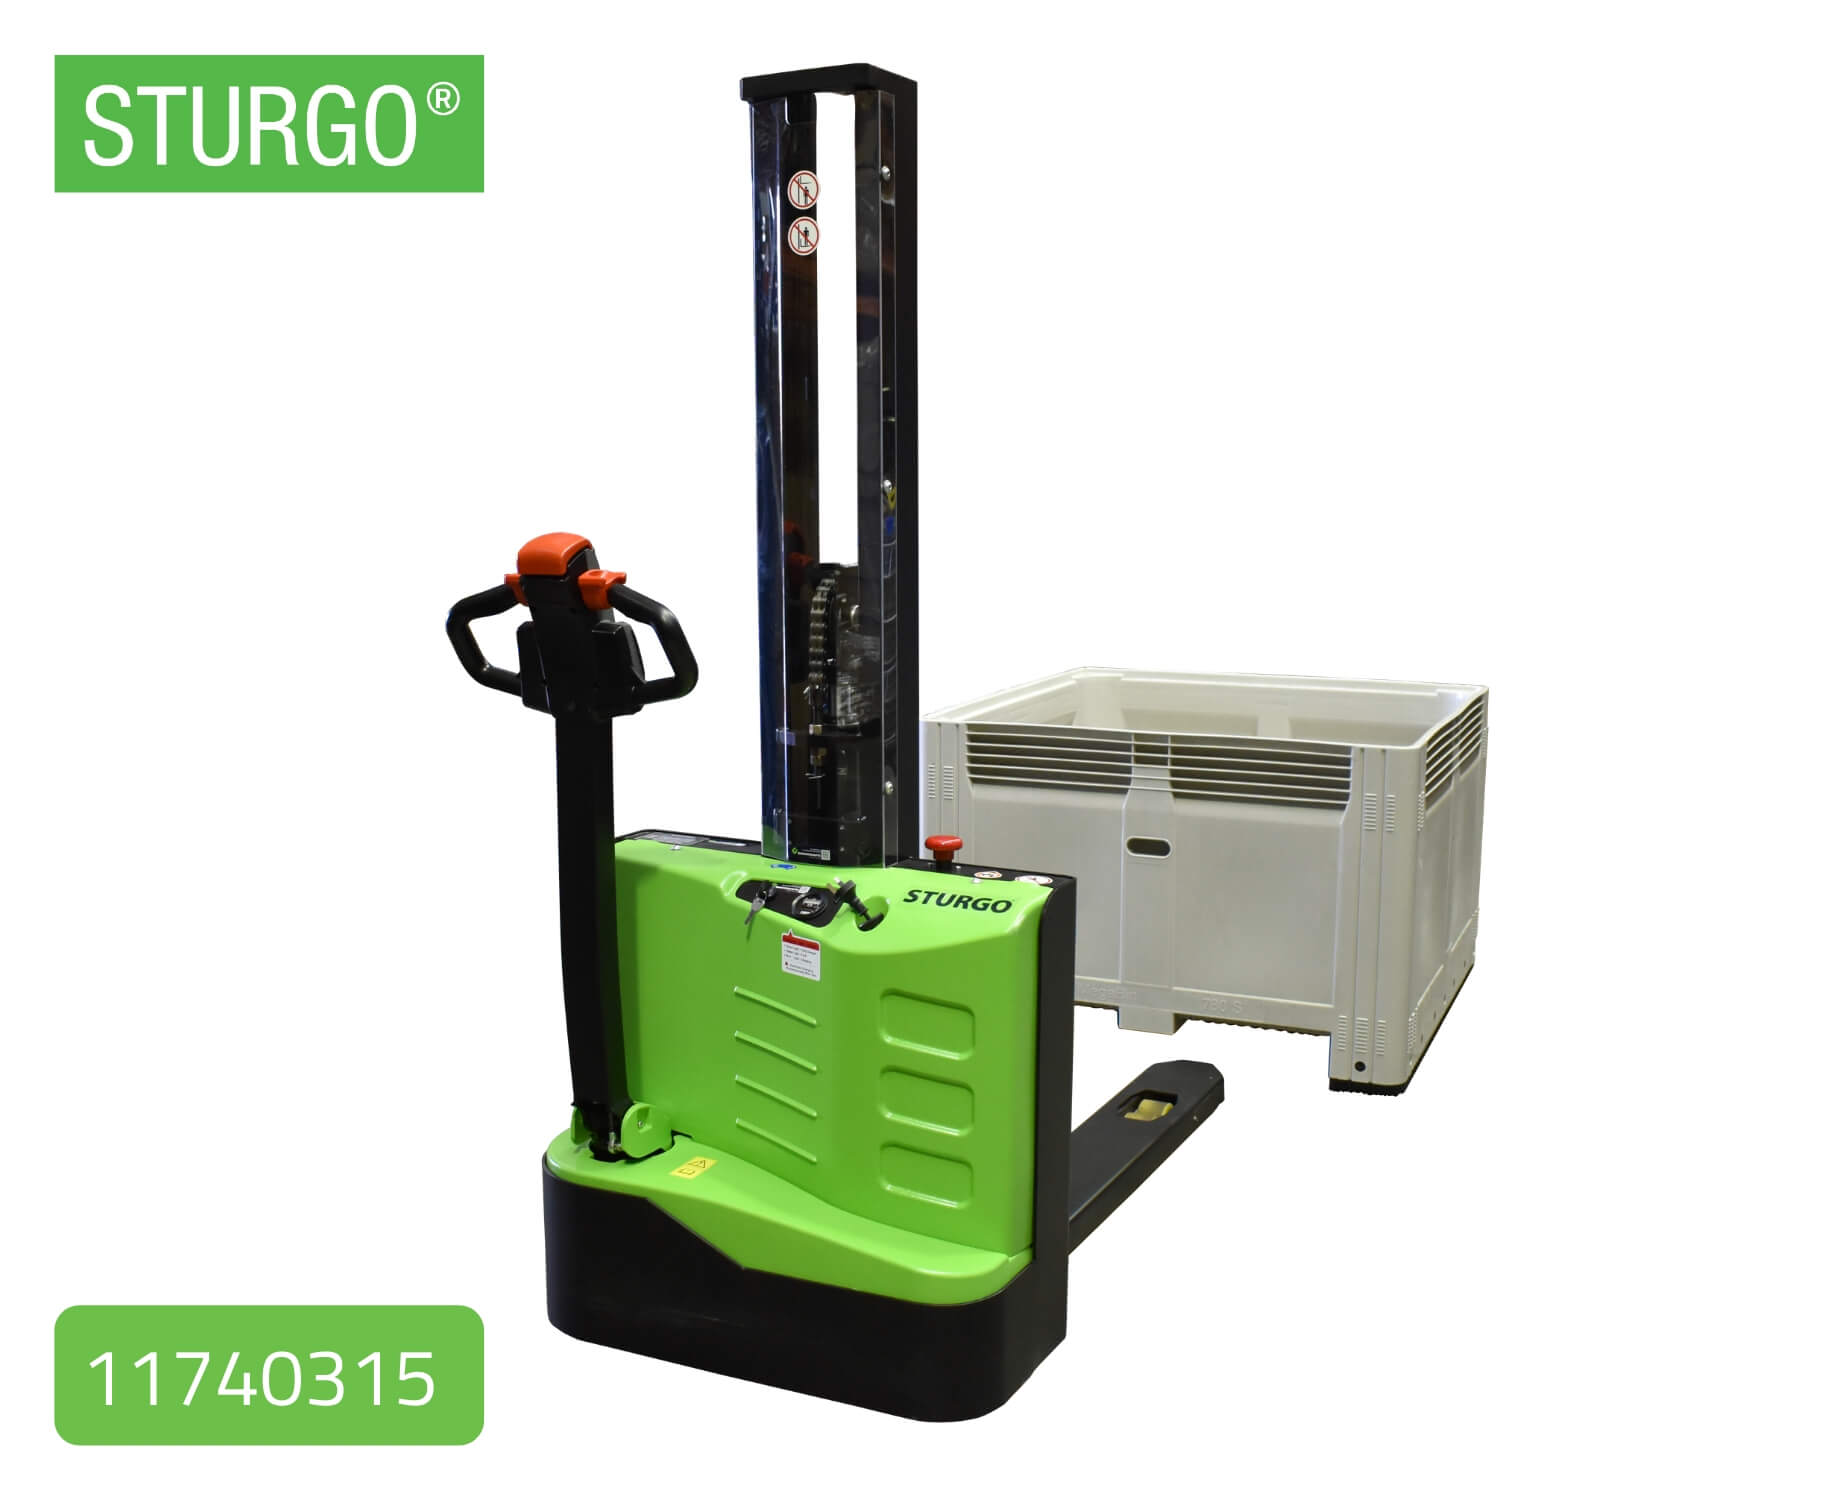 STURGO® Compact Electric Non-Straddle Stacker